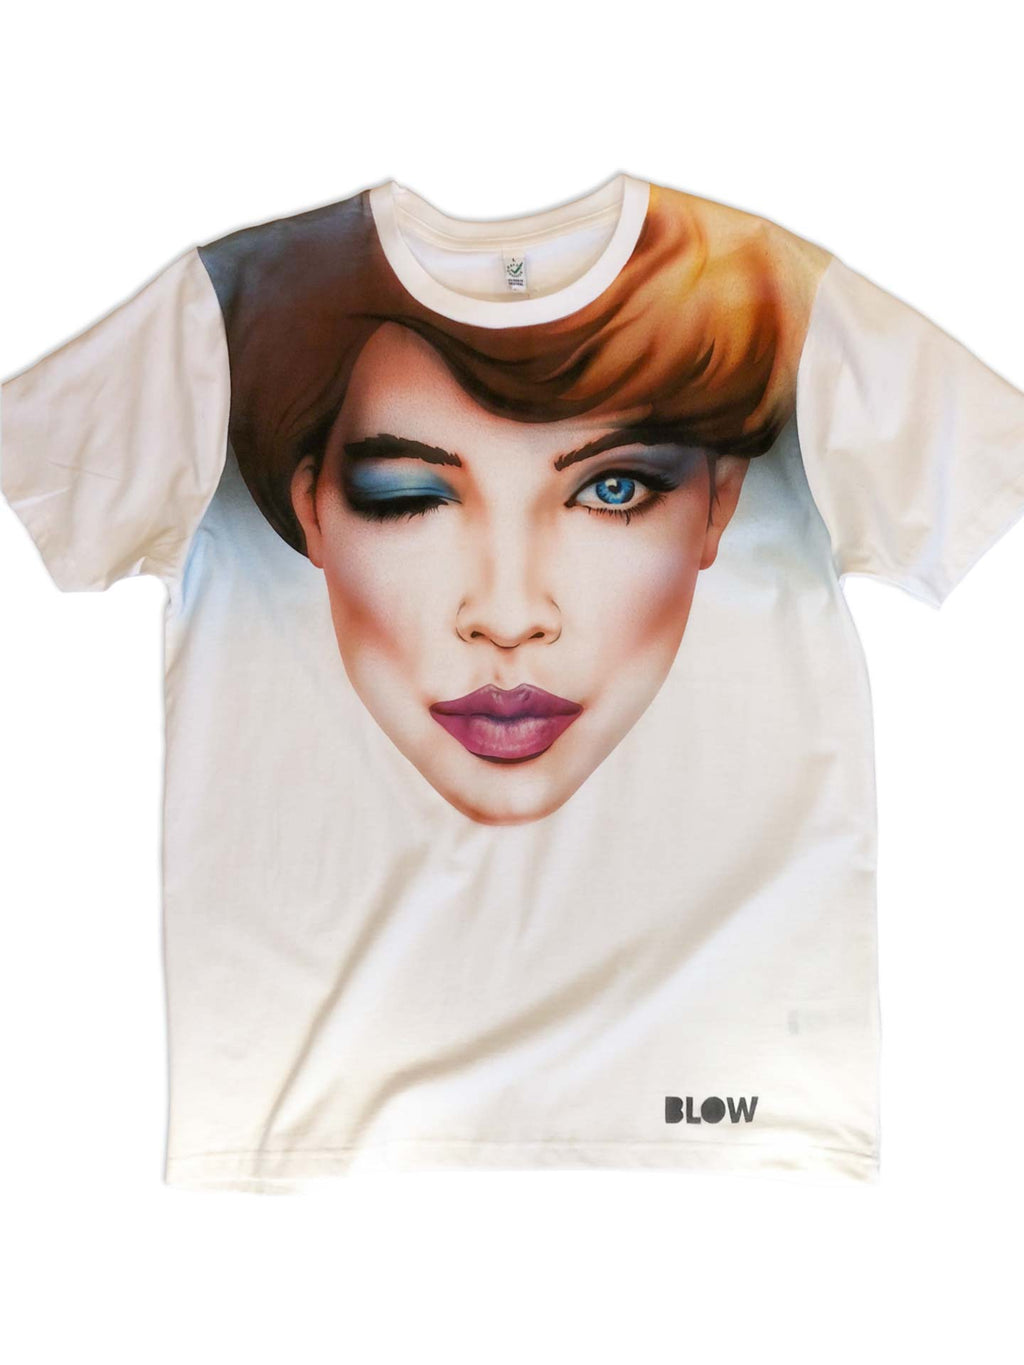 SHE WINKED (colour) - Unisex premium short sleeve t-shirt - BLOW London